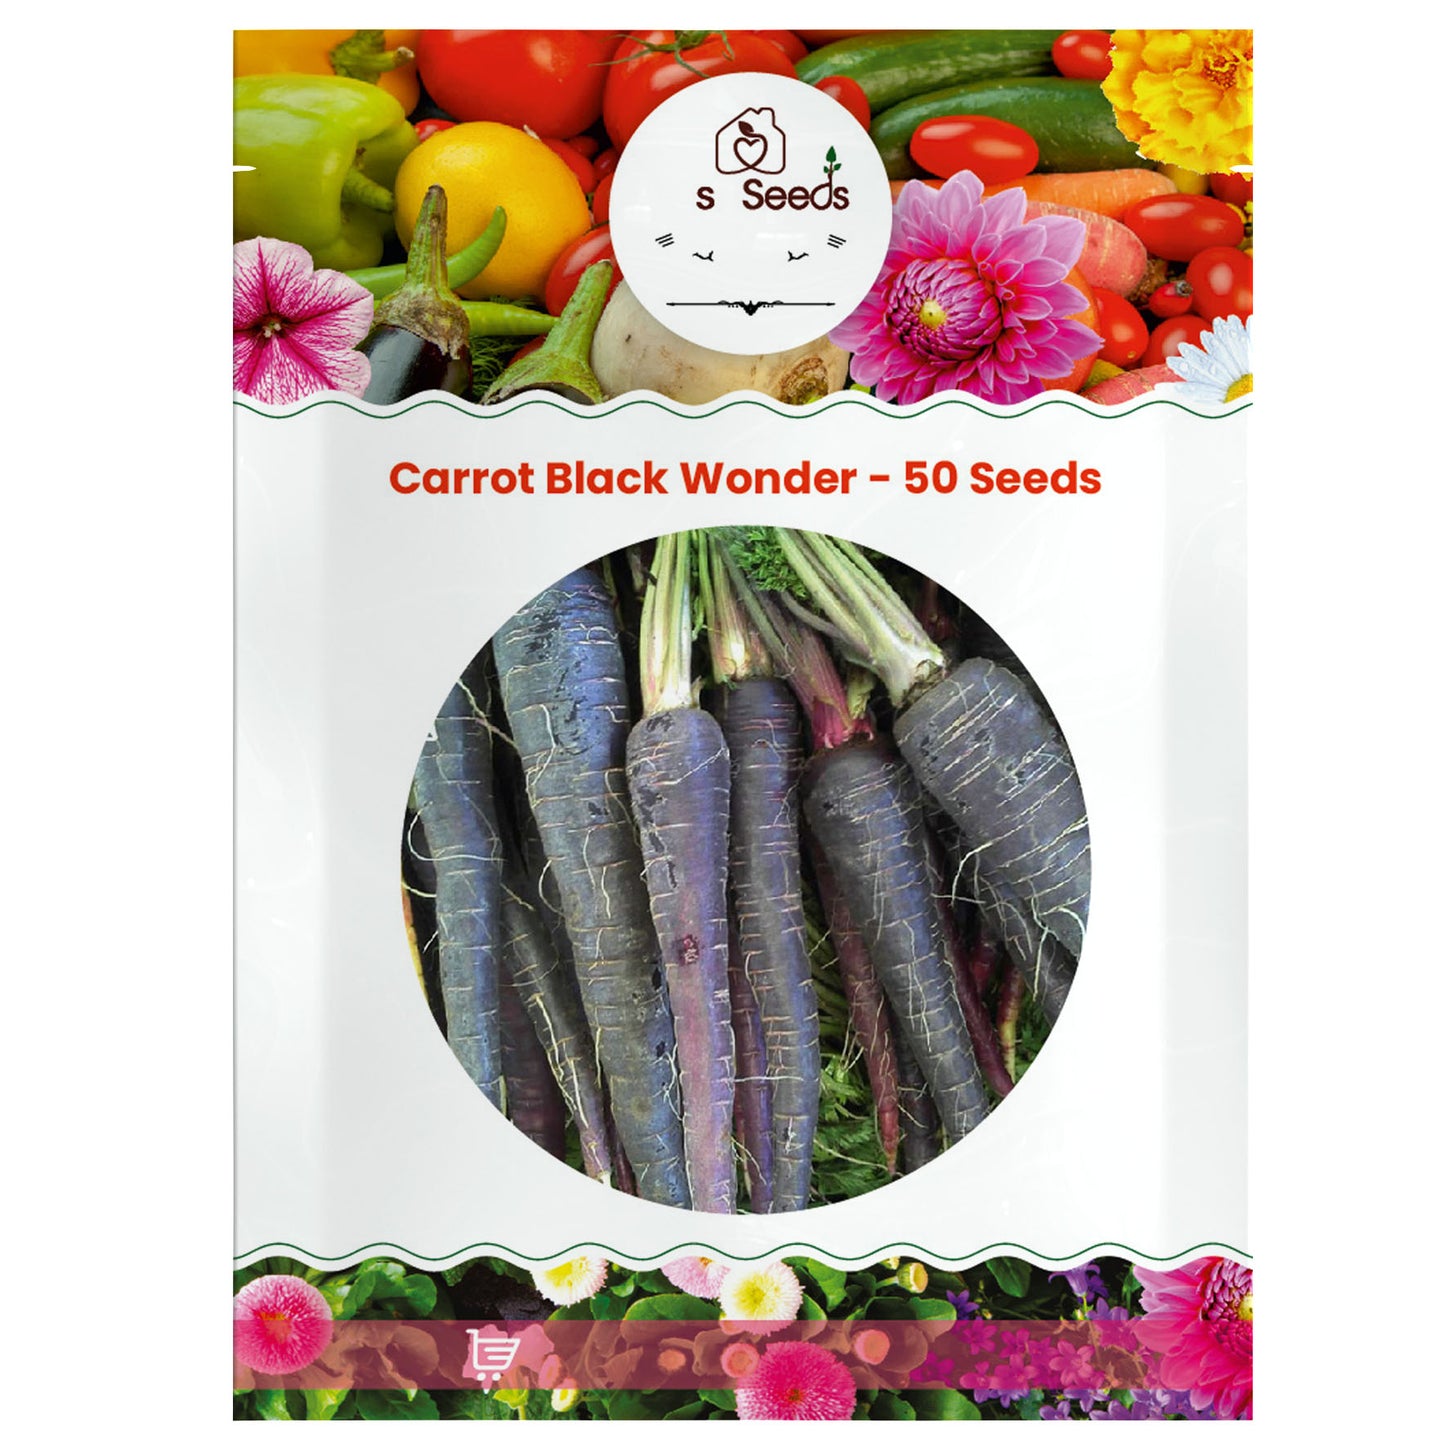 Carrot Black Wonder - 50 Seeds